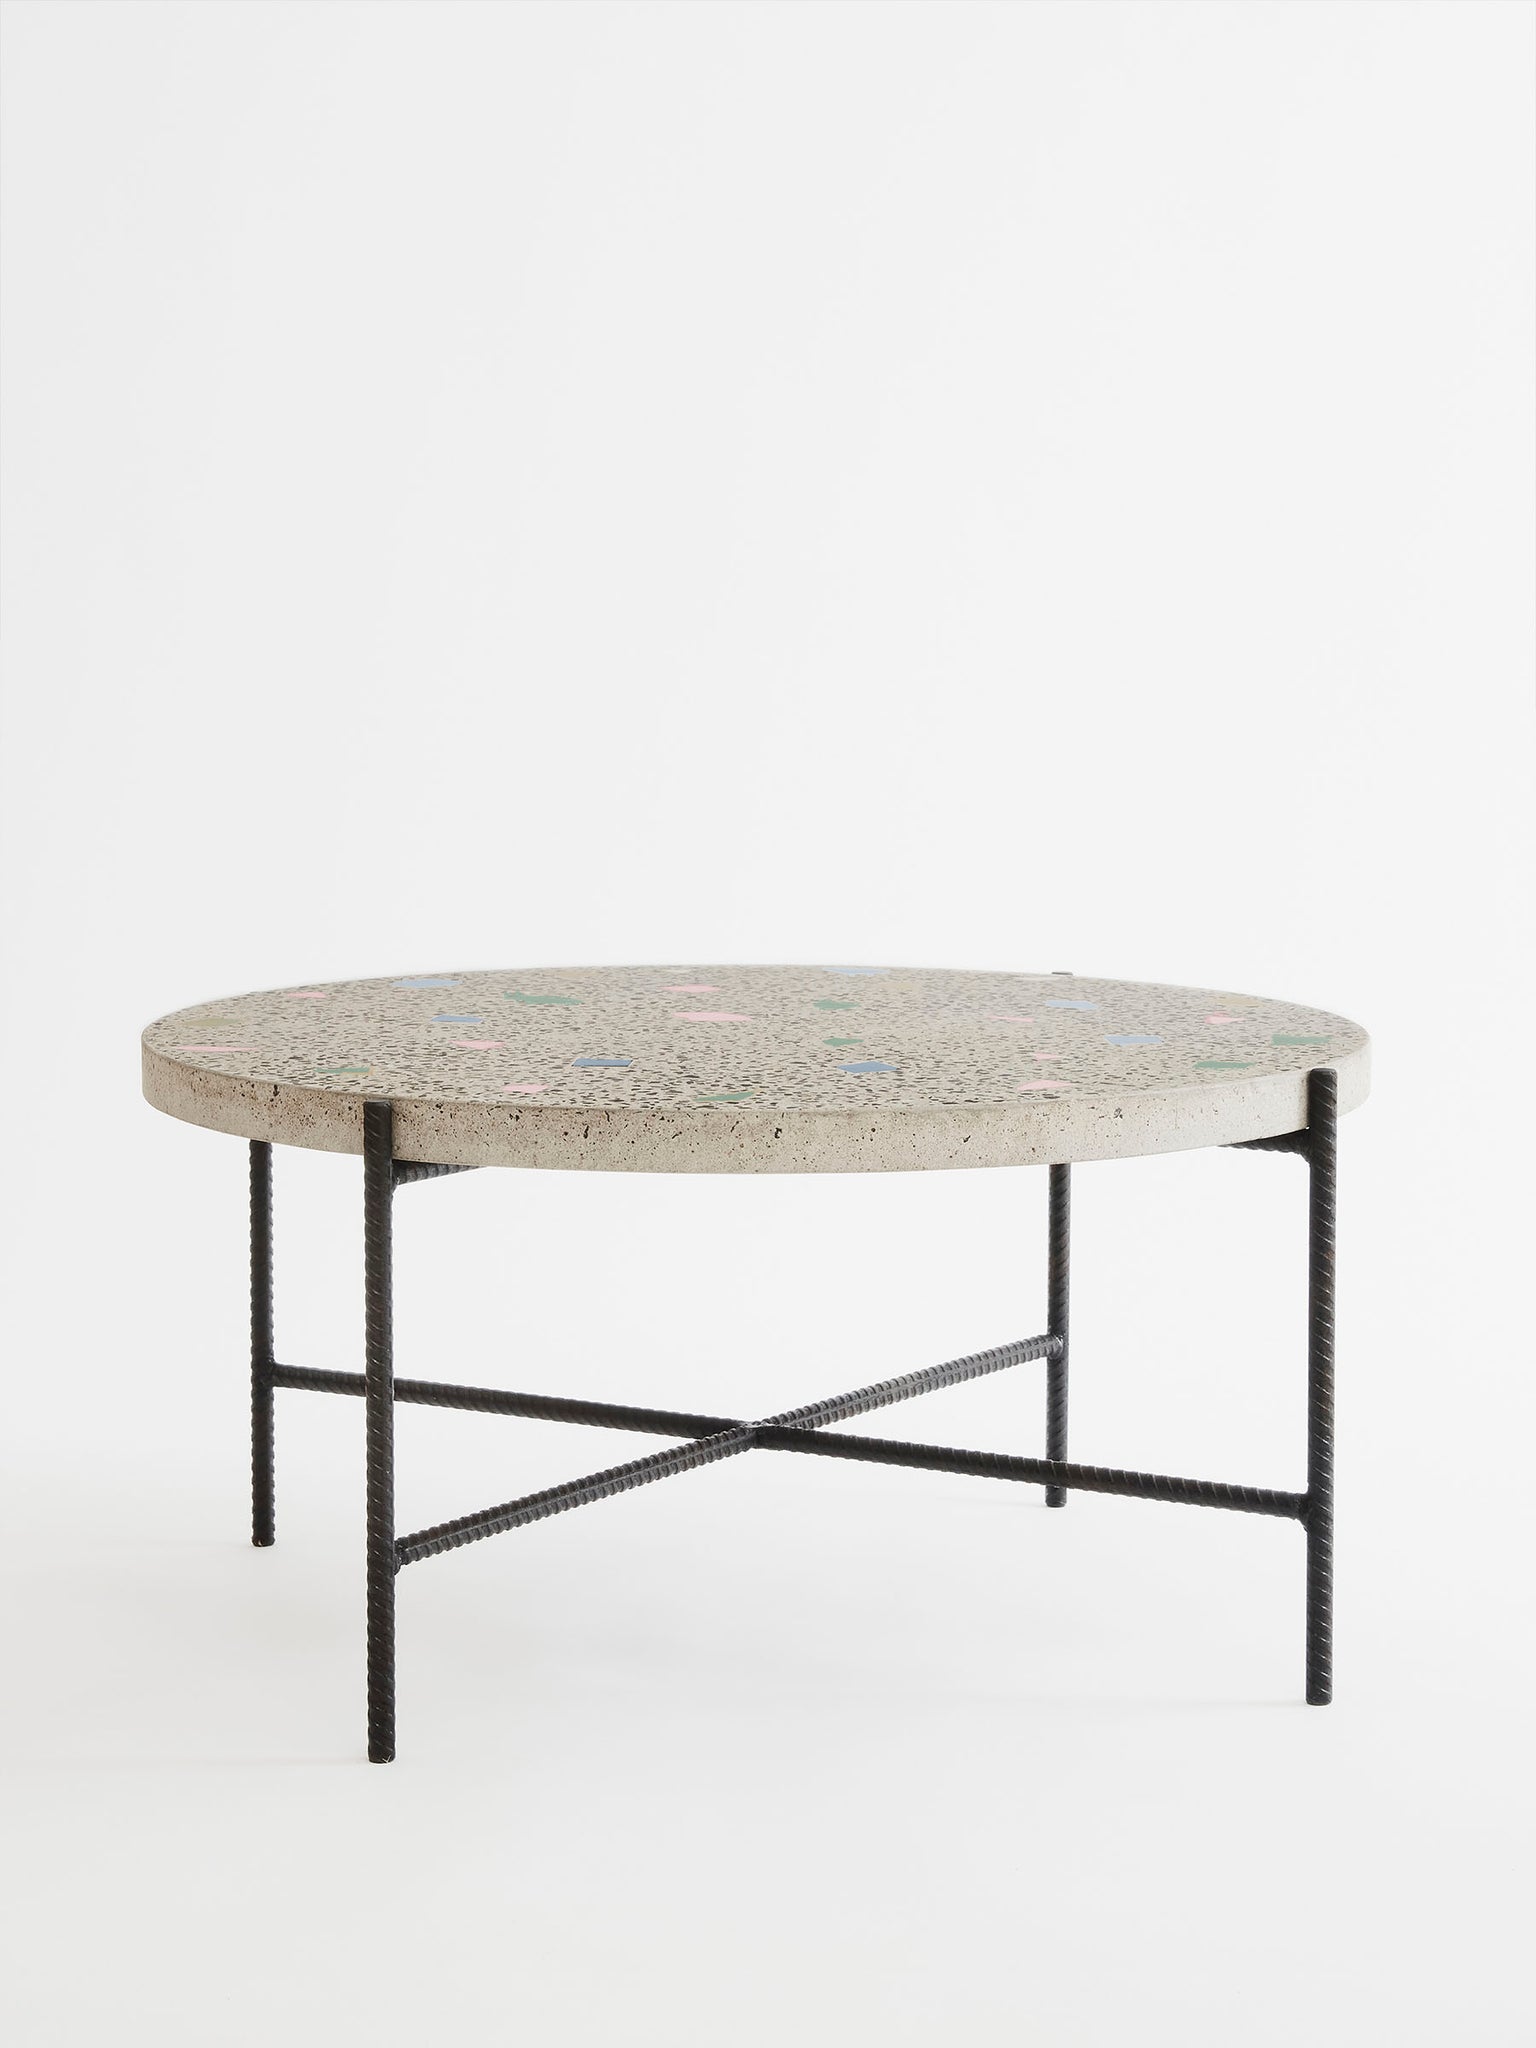 Waste Terrazzo Table, Tile